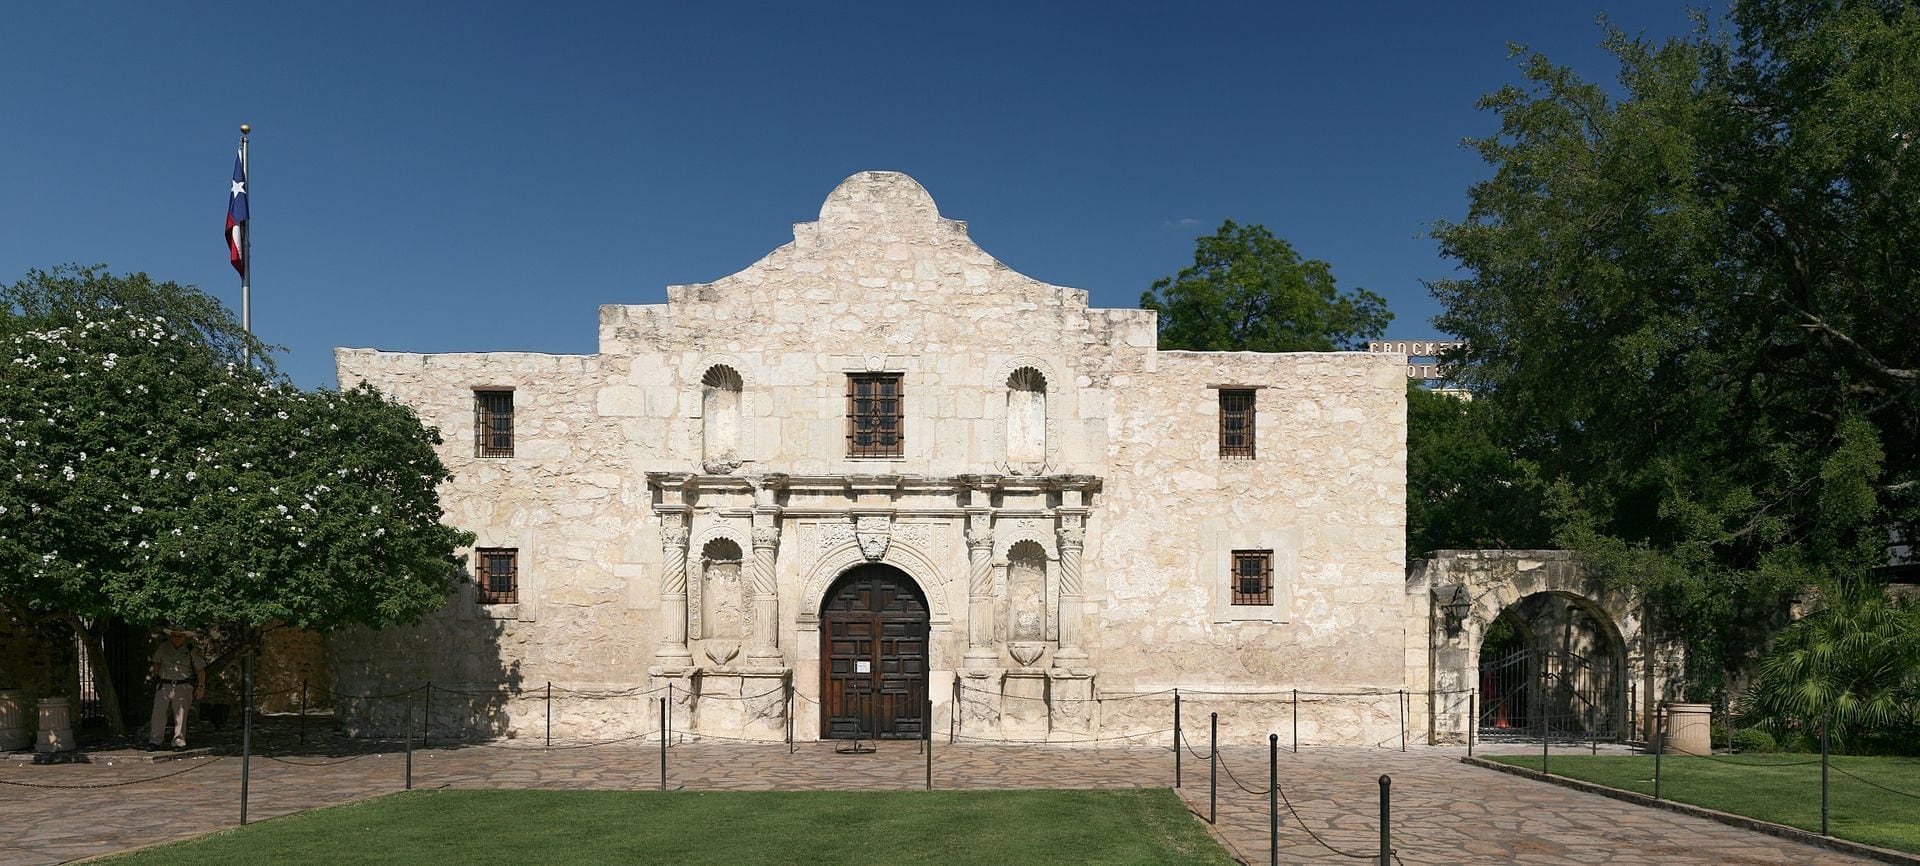 A view of the Alamo. (Daniel Schwen / Wikicommons)